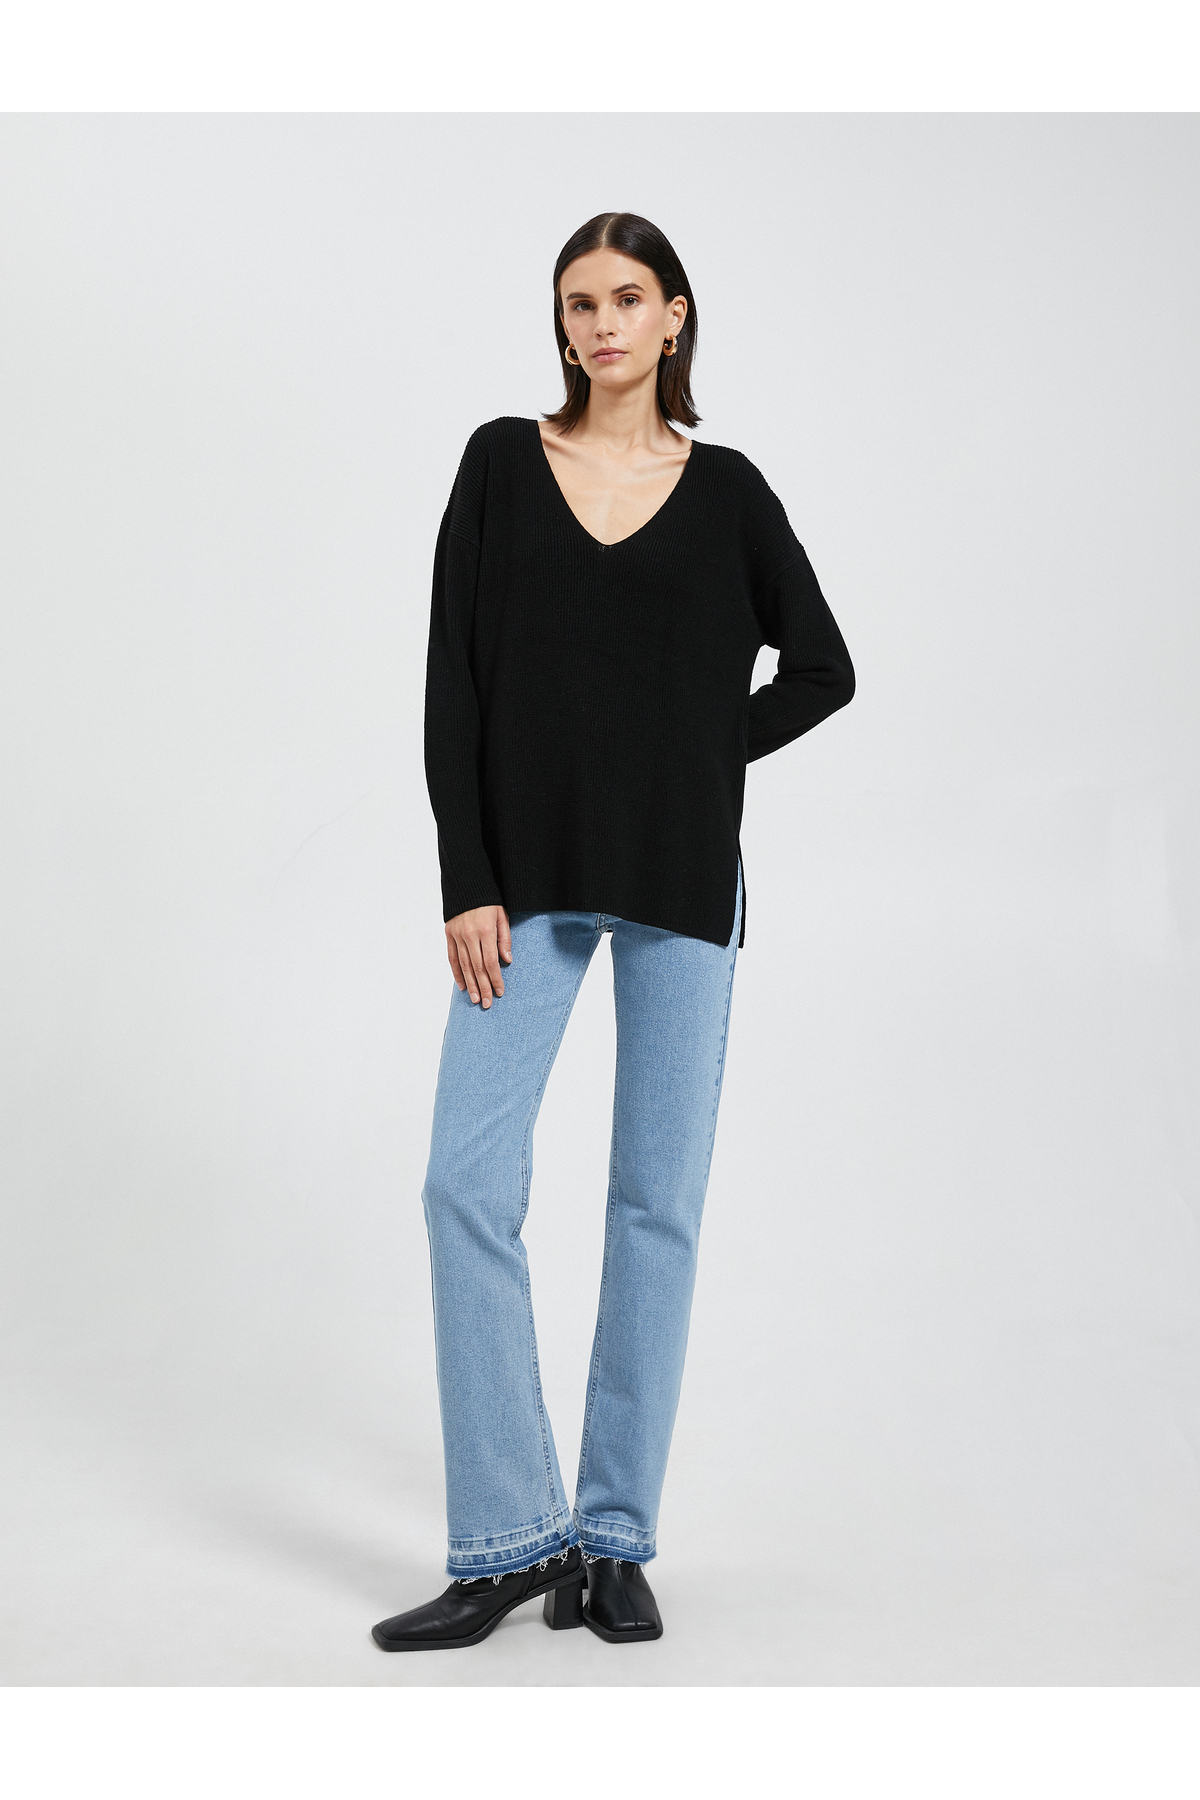 Koton V-Neck Sweater Oversize Long Sleeve Cashmere Textured